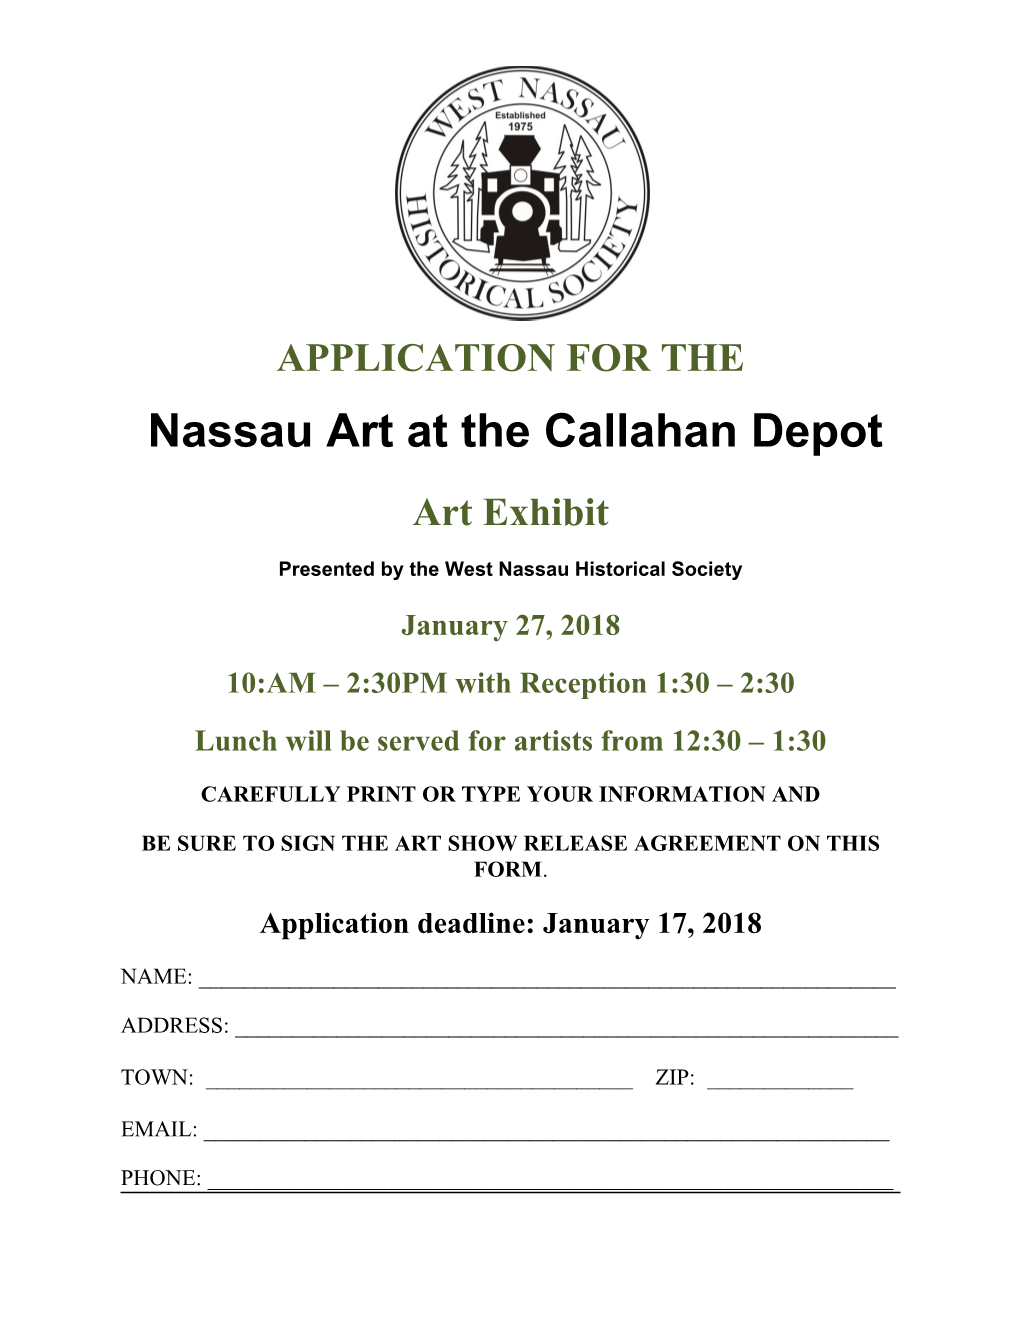 Nassau Art at the Callahan Depot Applicationpage 1